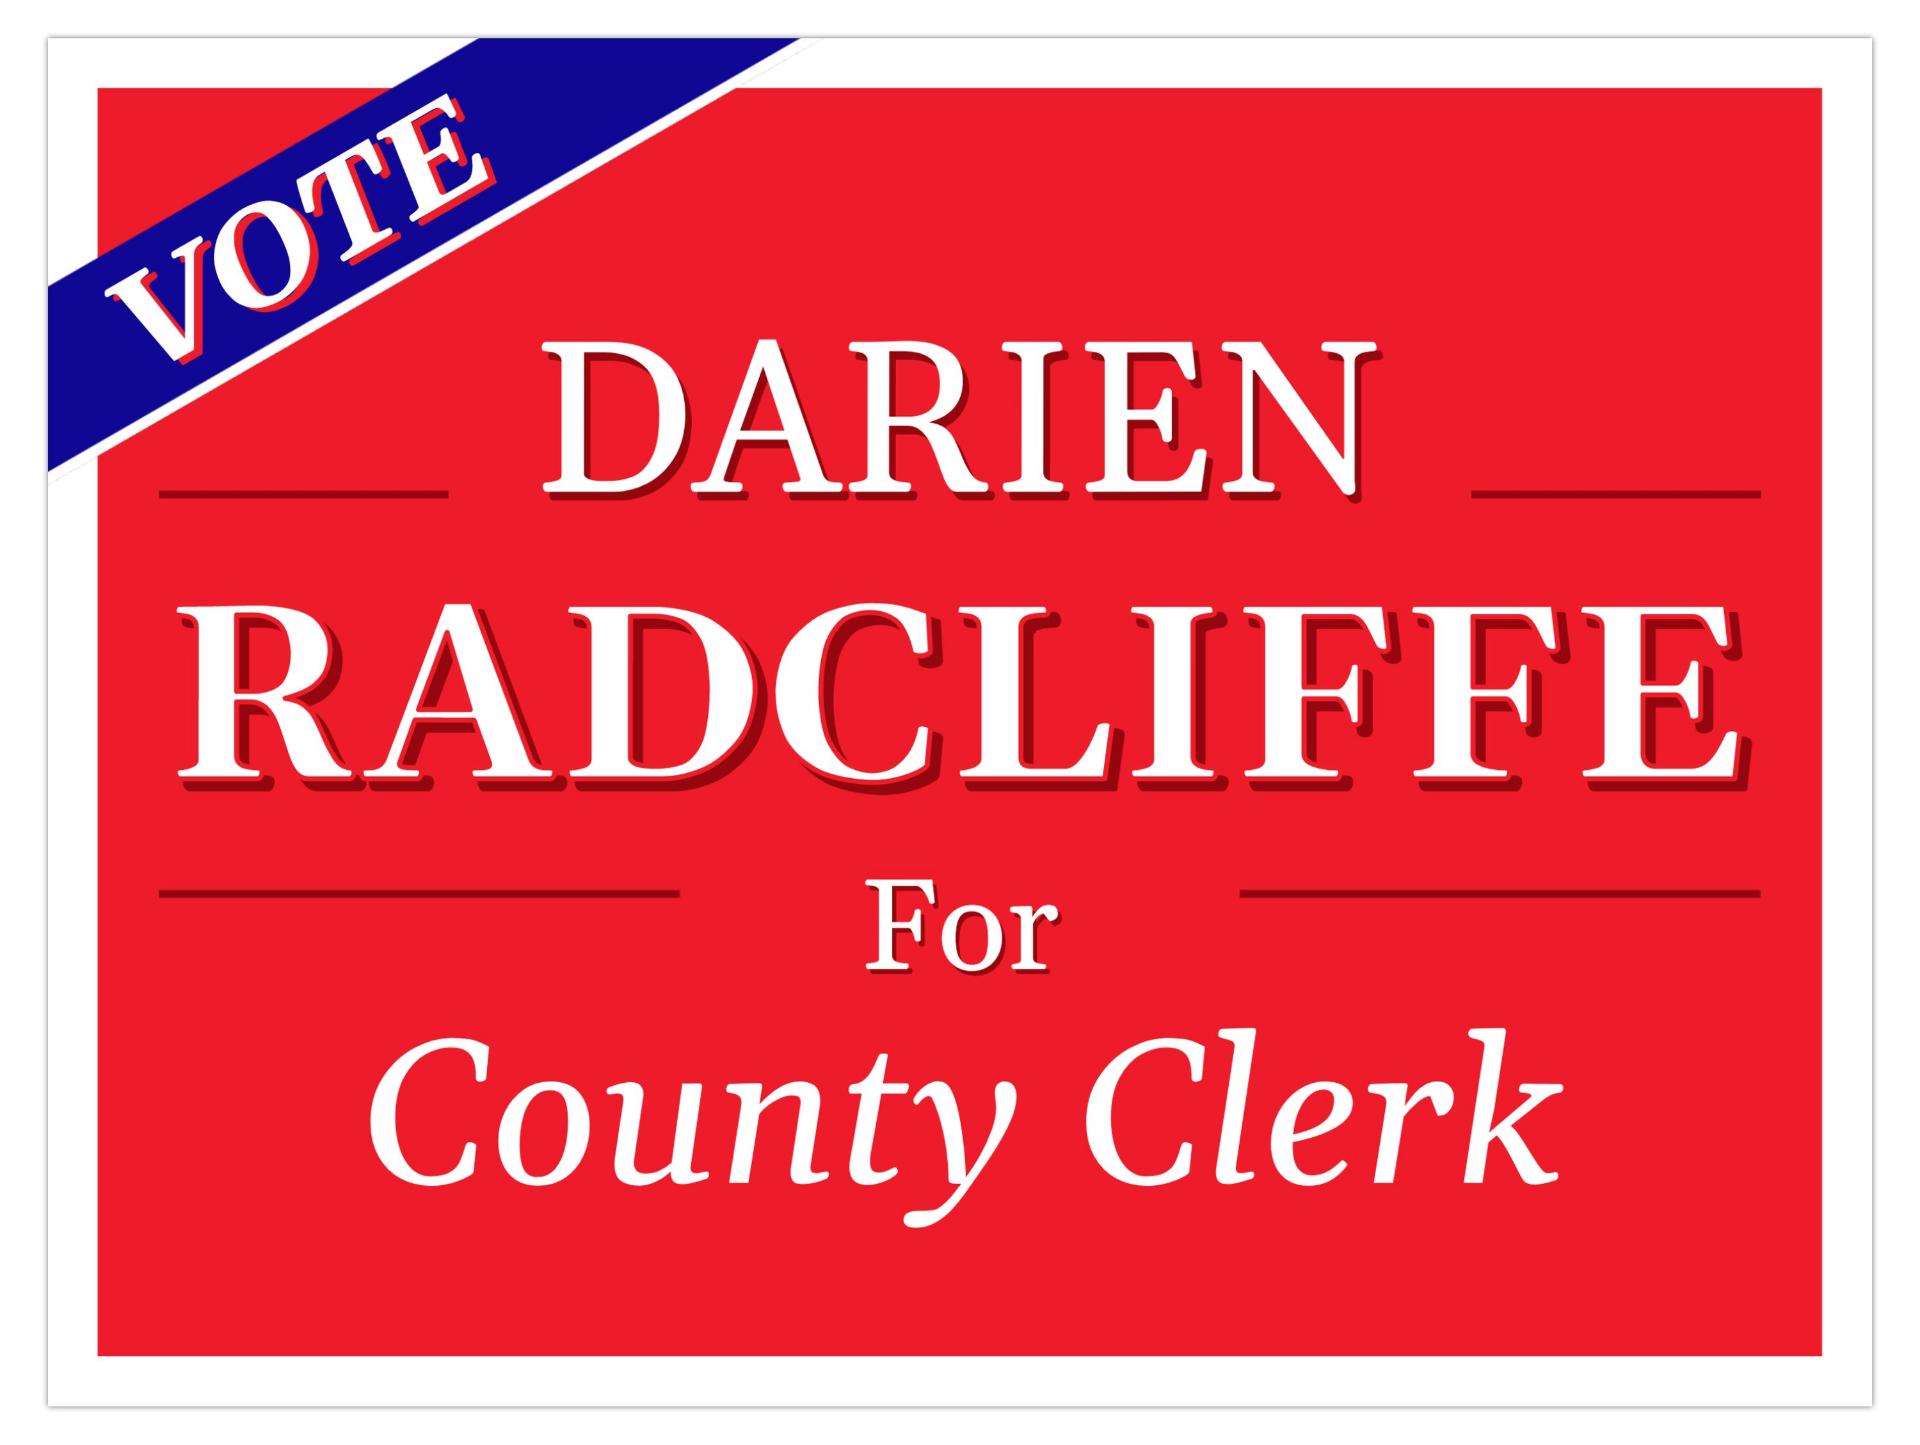 Vote for Darien Radcliffe!